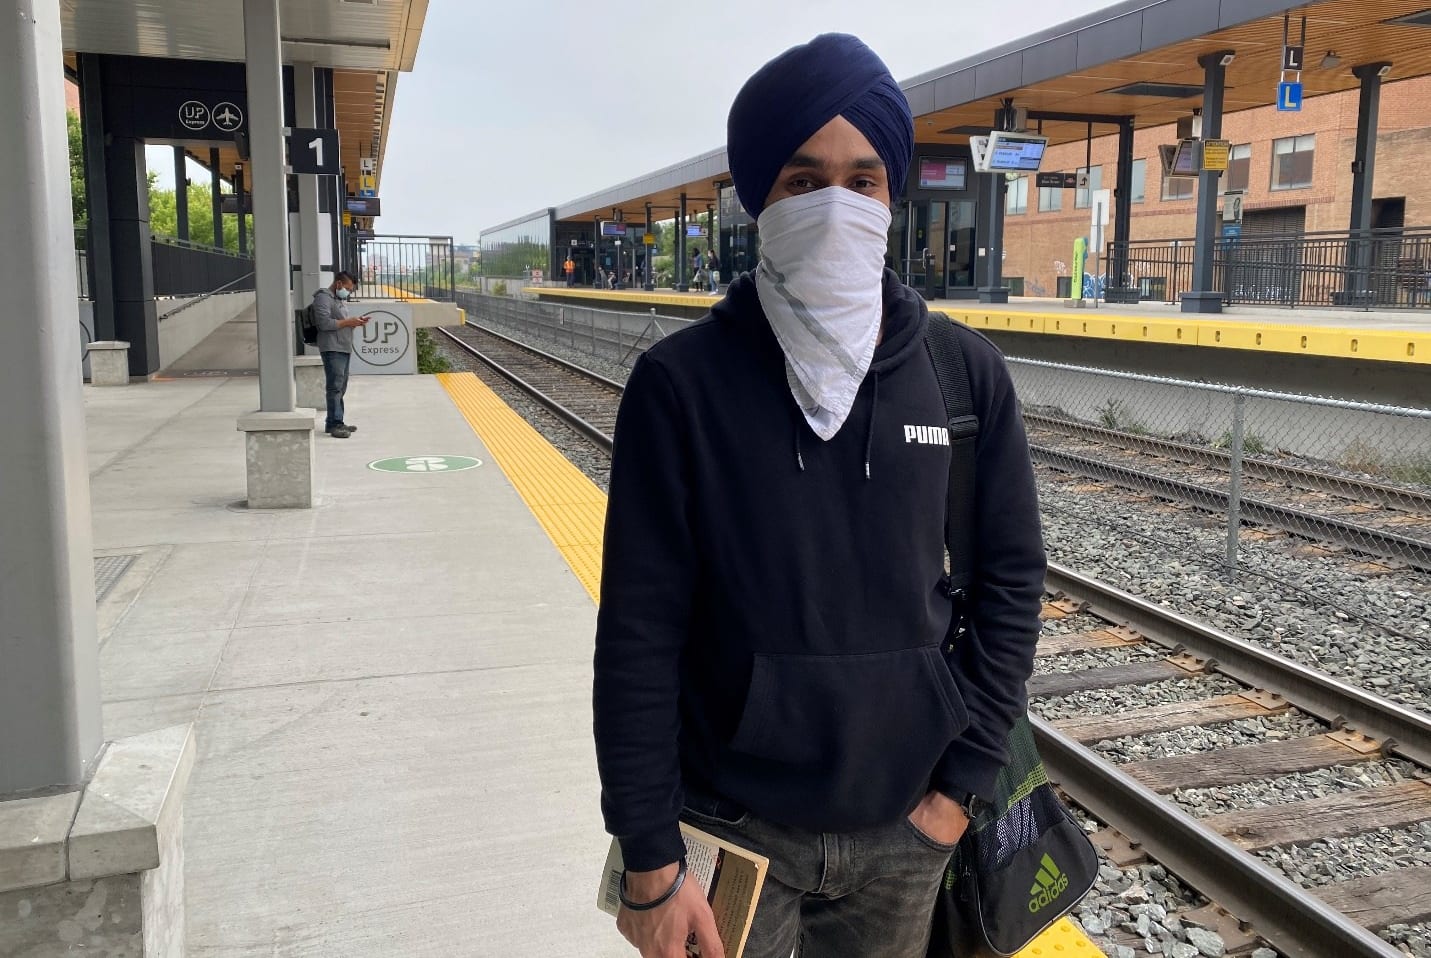 GO Customer Kunwardeep Singh on the platform waiting for his train